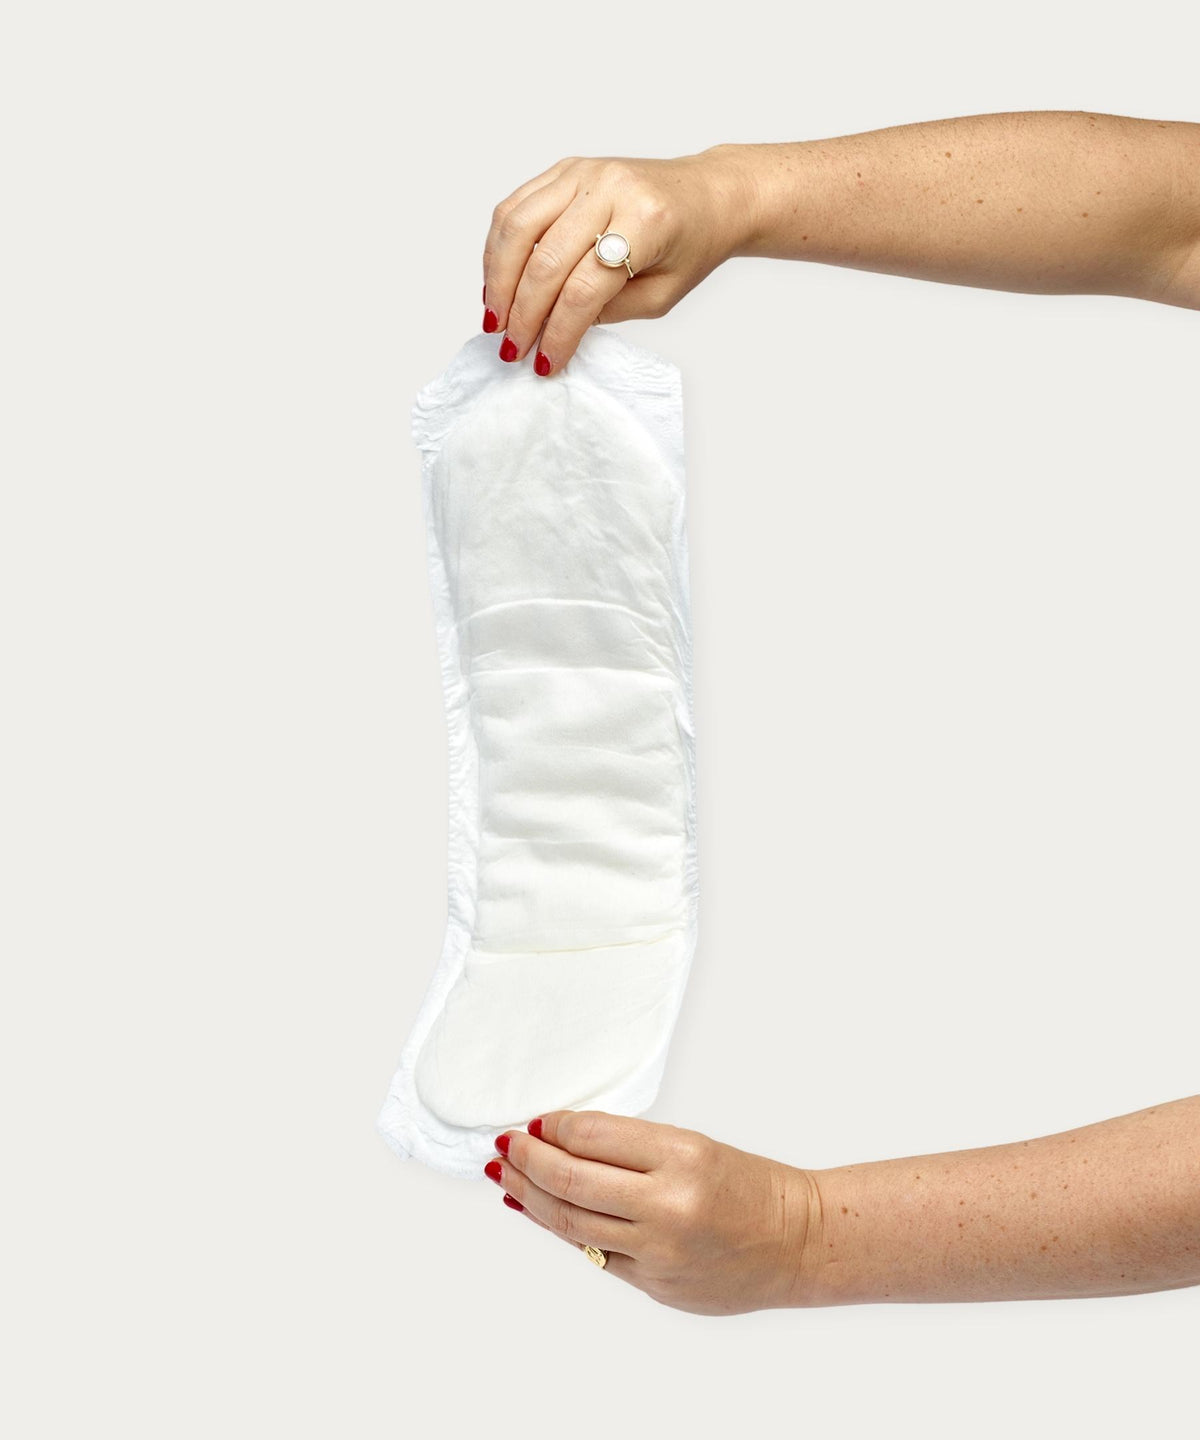 Nyssa Organic Cotton Extra-Long Postpartum Pads